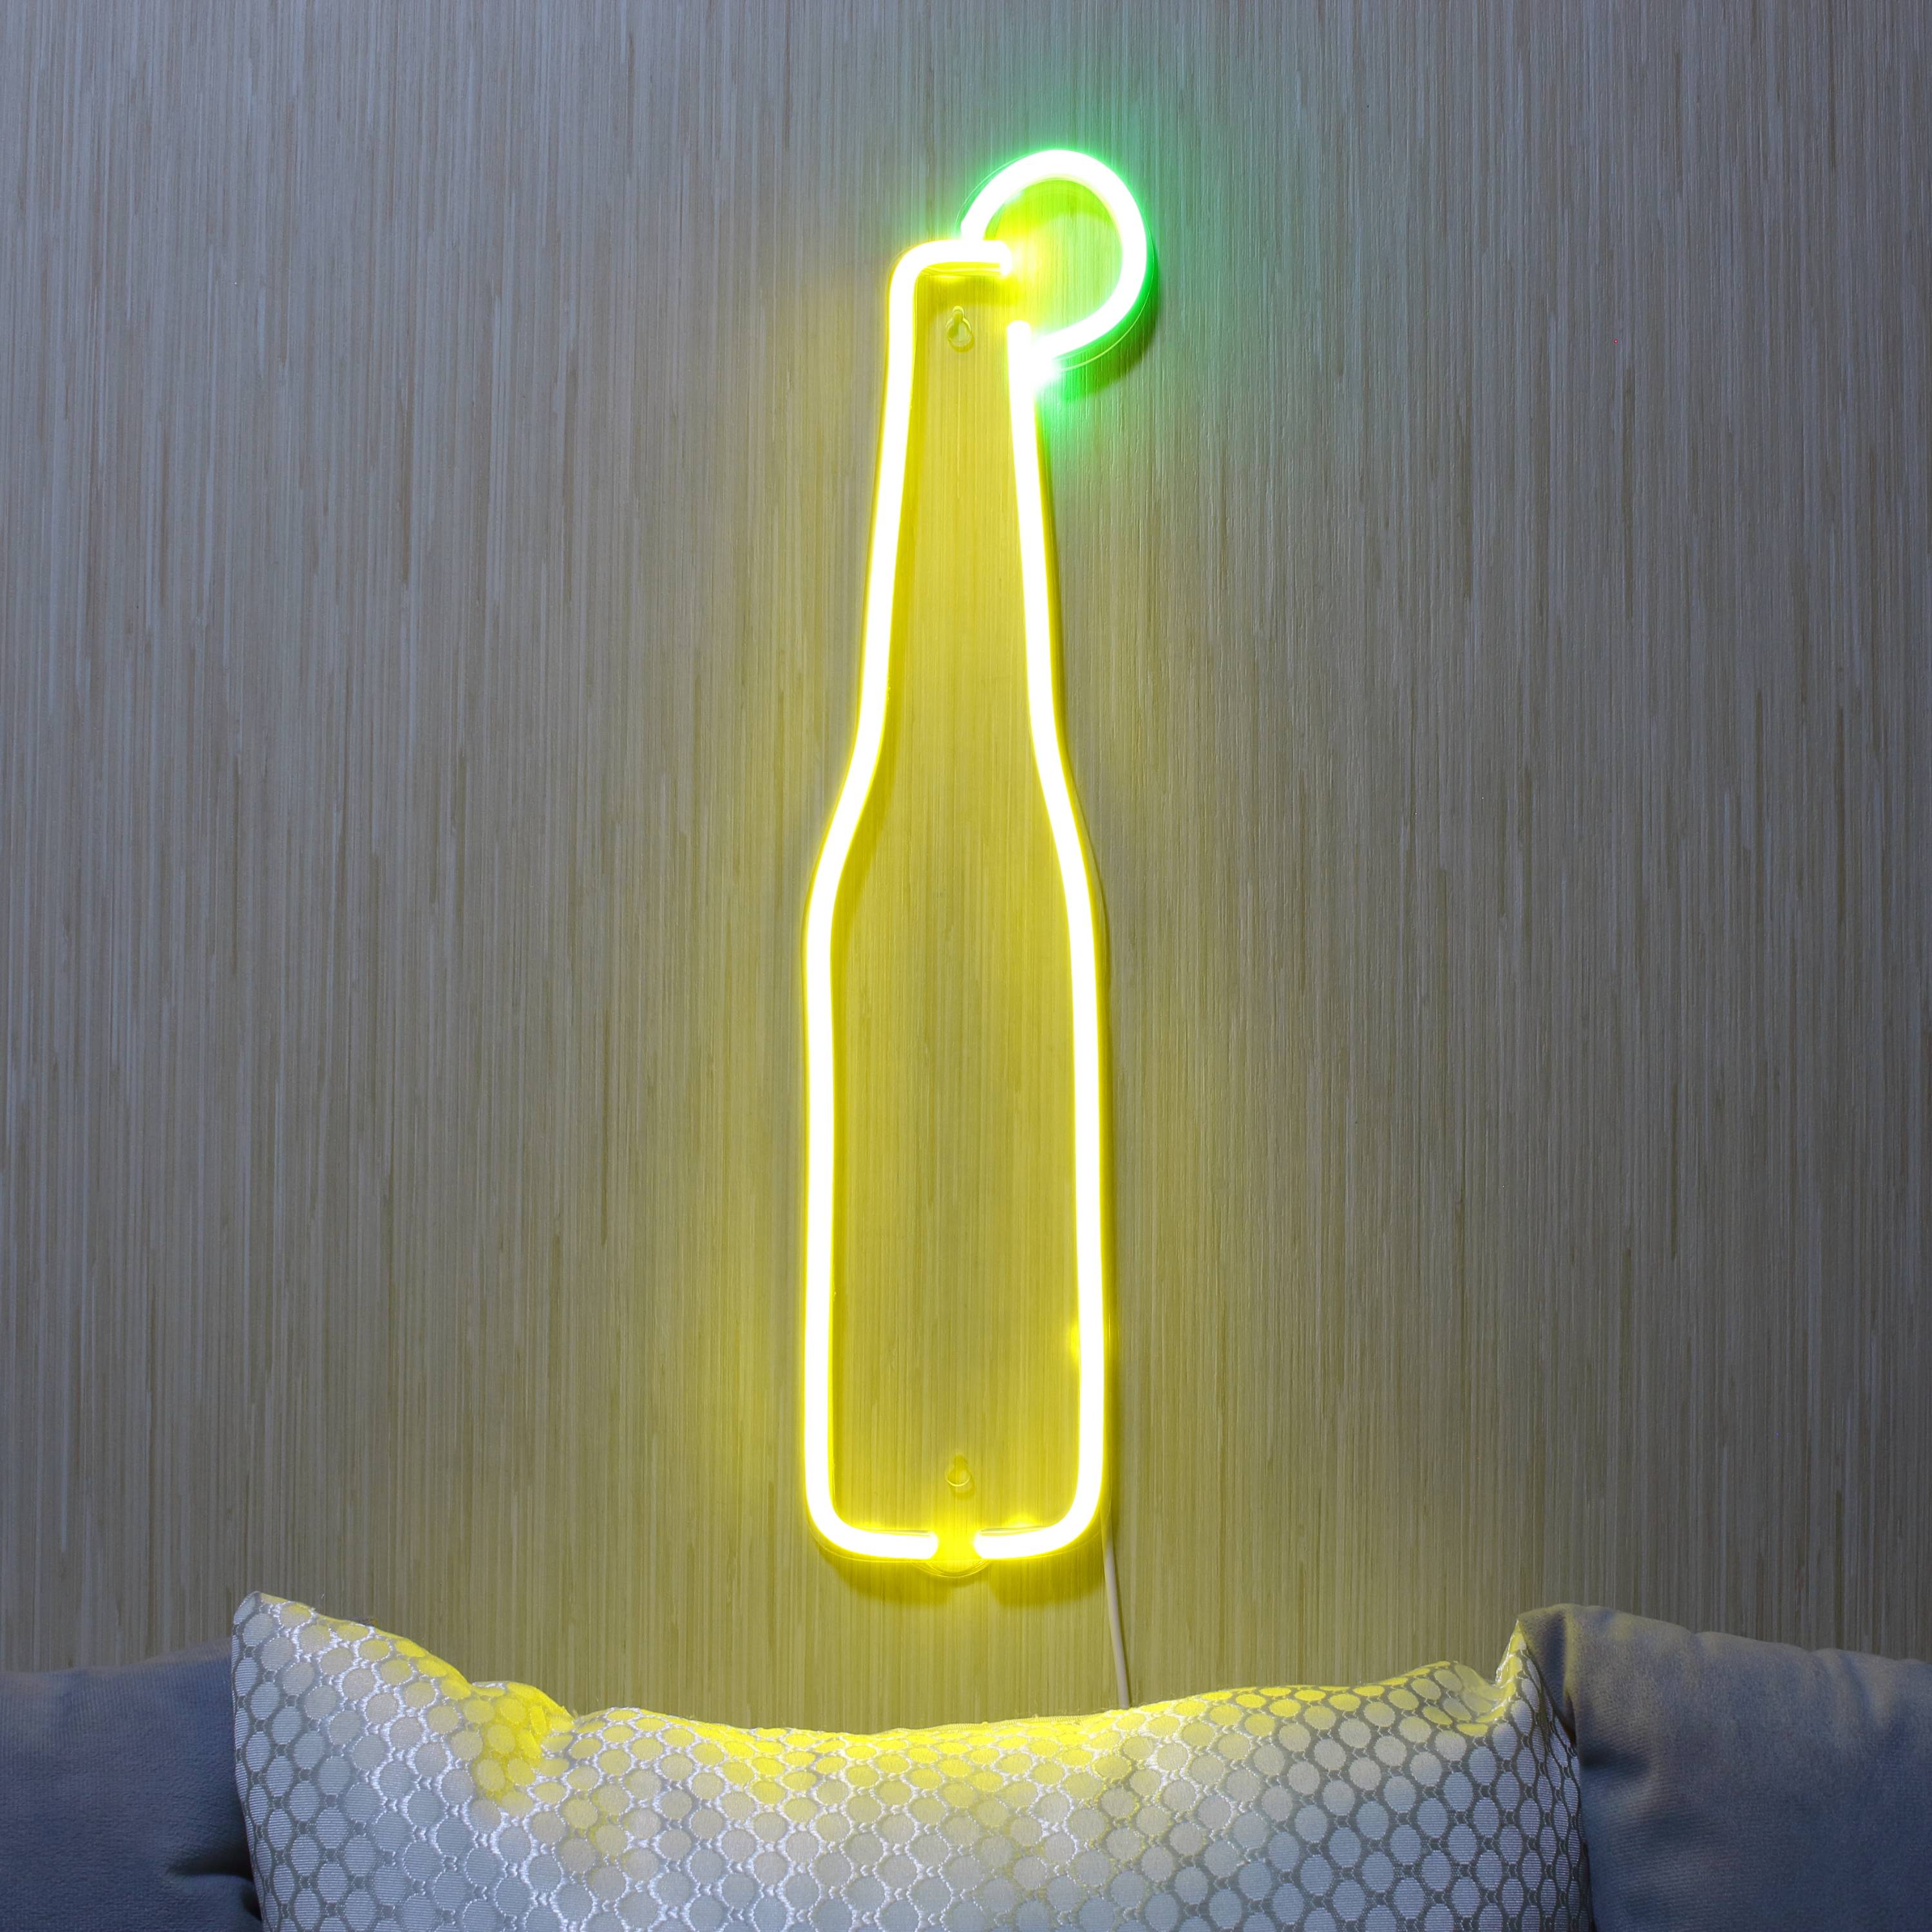 Beer Bottle for Corona Large Flex Neon LED Sign